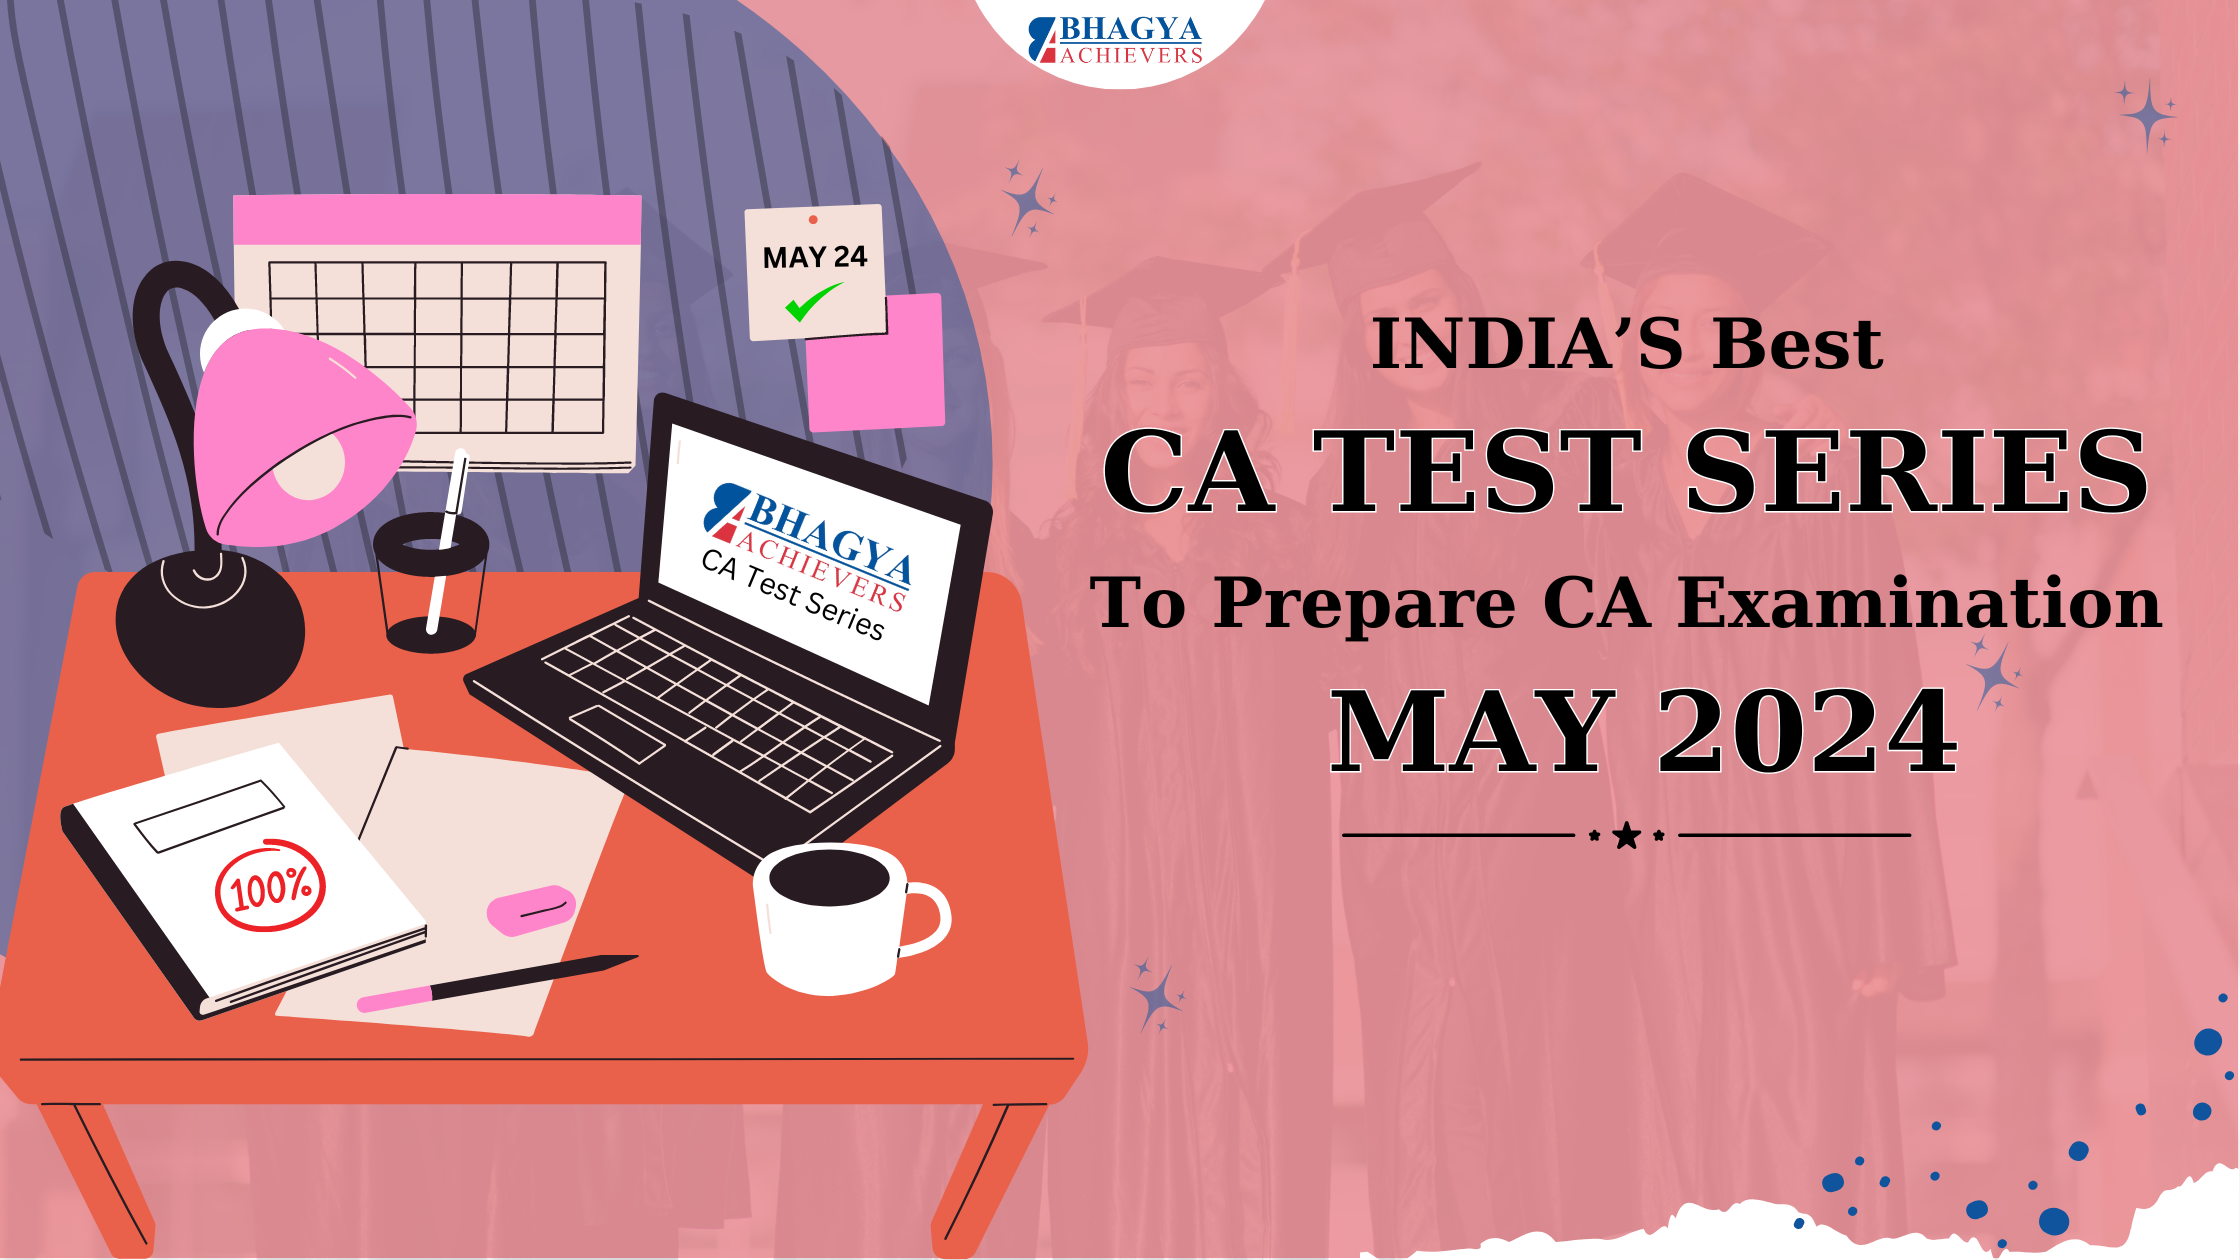 Best CA test series for CA exam May 2024 - Bhagya Achievers